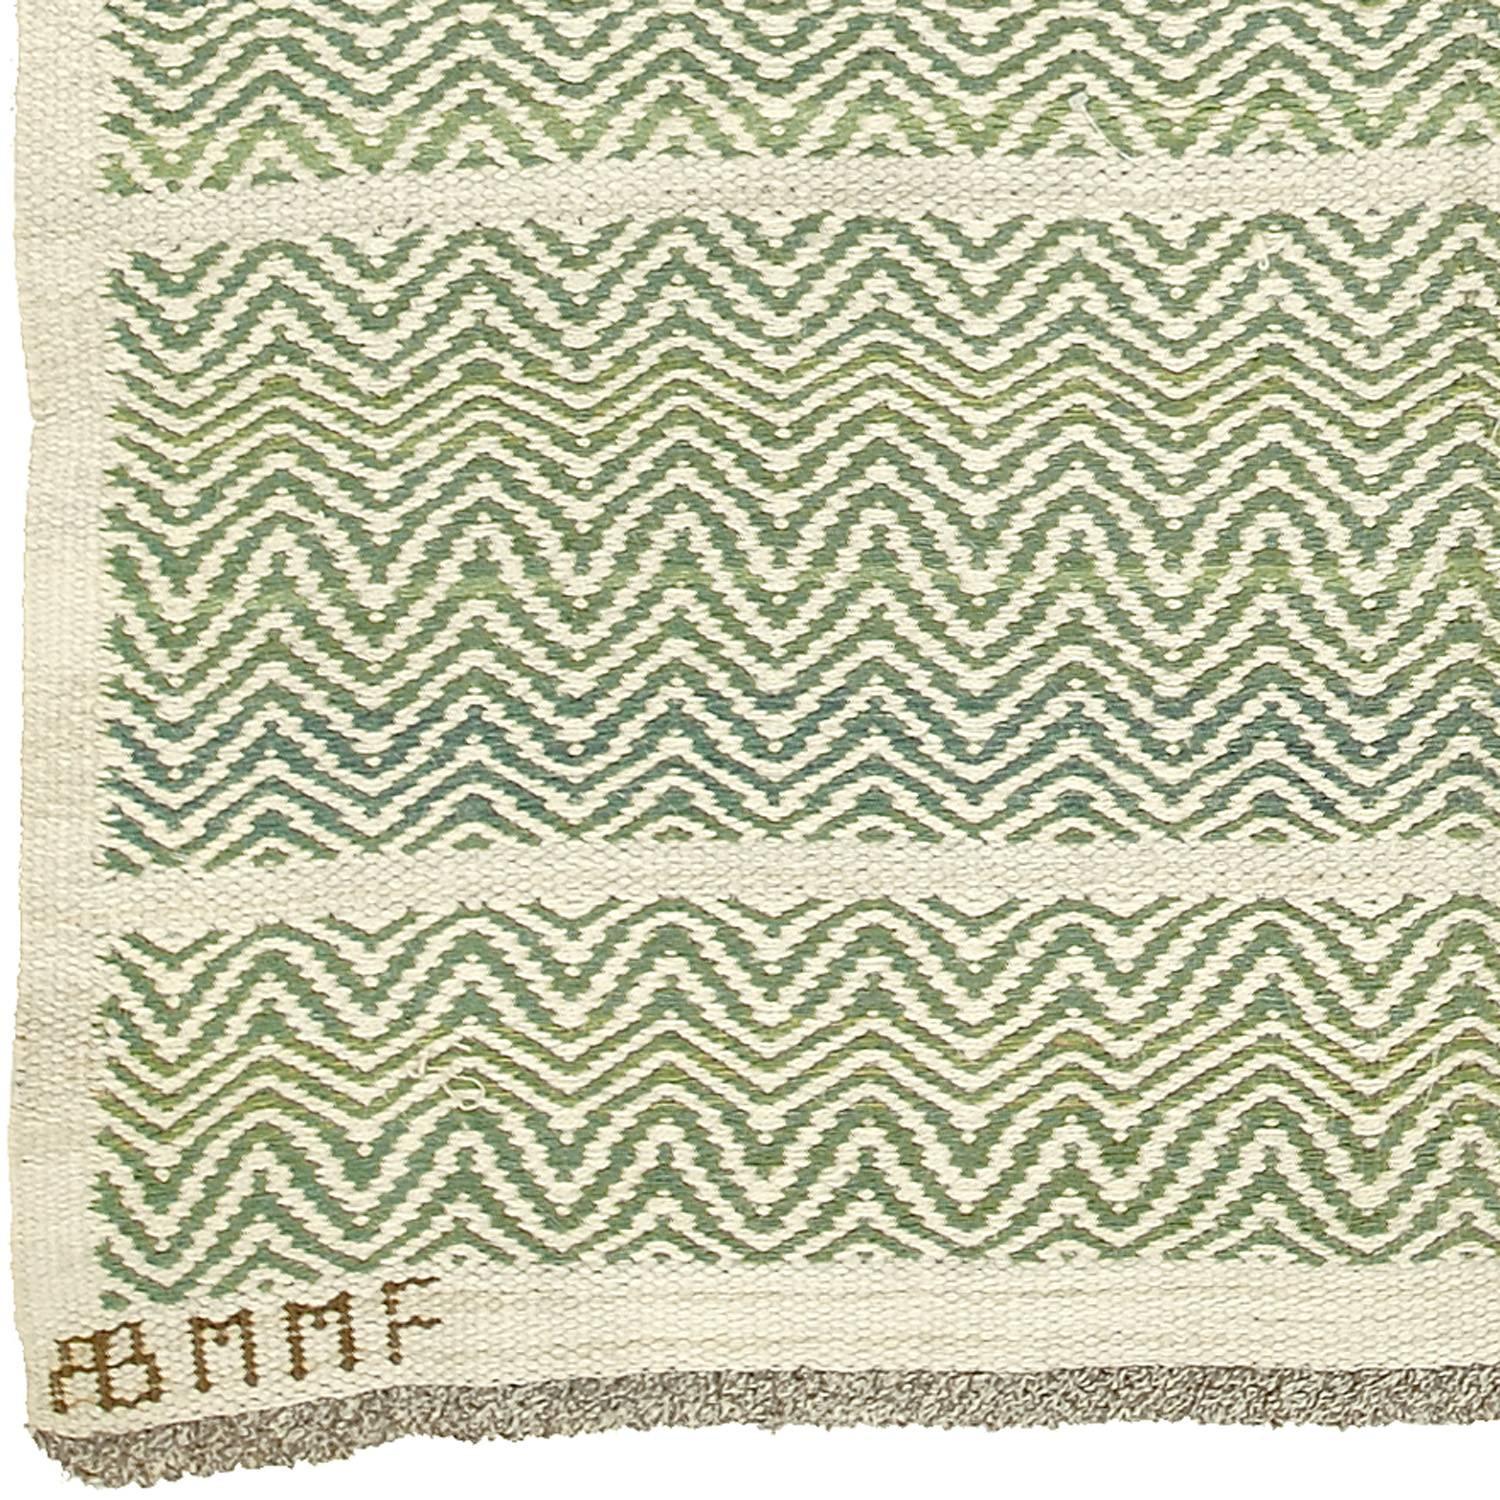 Scandinavian Modern Mid-20th Century Swedish Flat-Weave Carpet by Barbro Nilsson For Sale